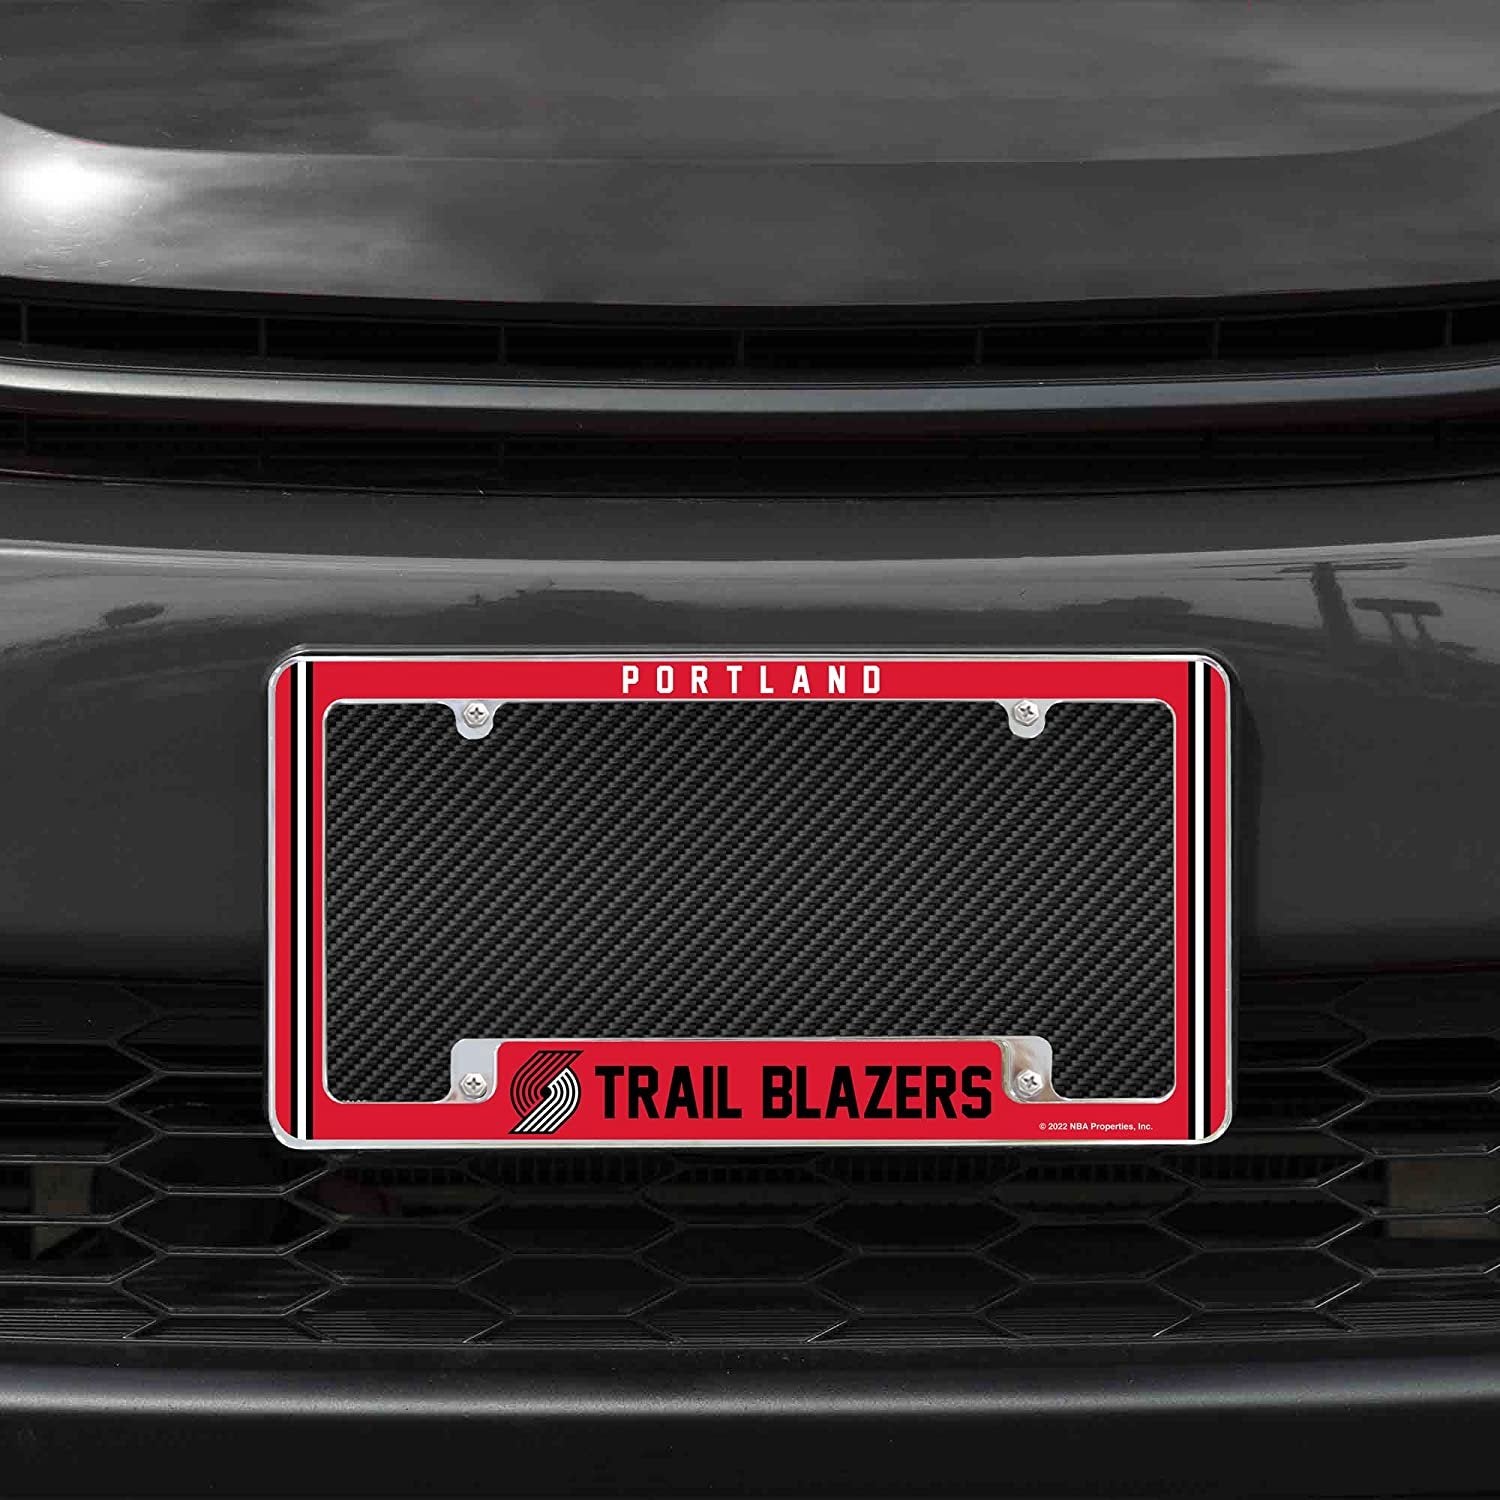 Portland Trail Blazers Metal License Plate Frame Chrome Tag Cover Alternate Design 6x12 Inch